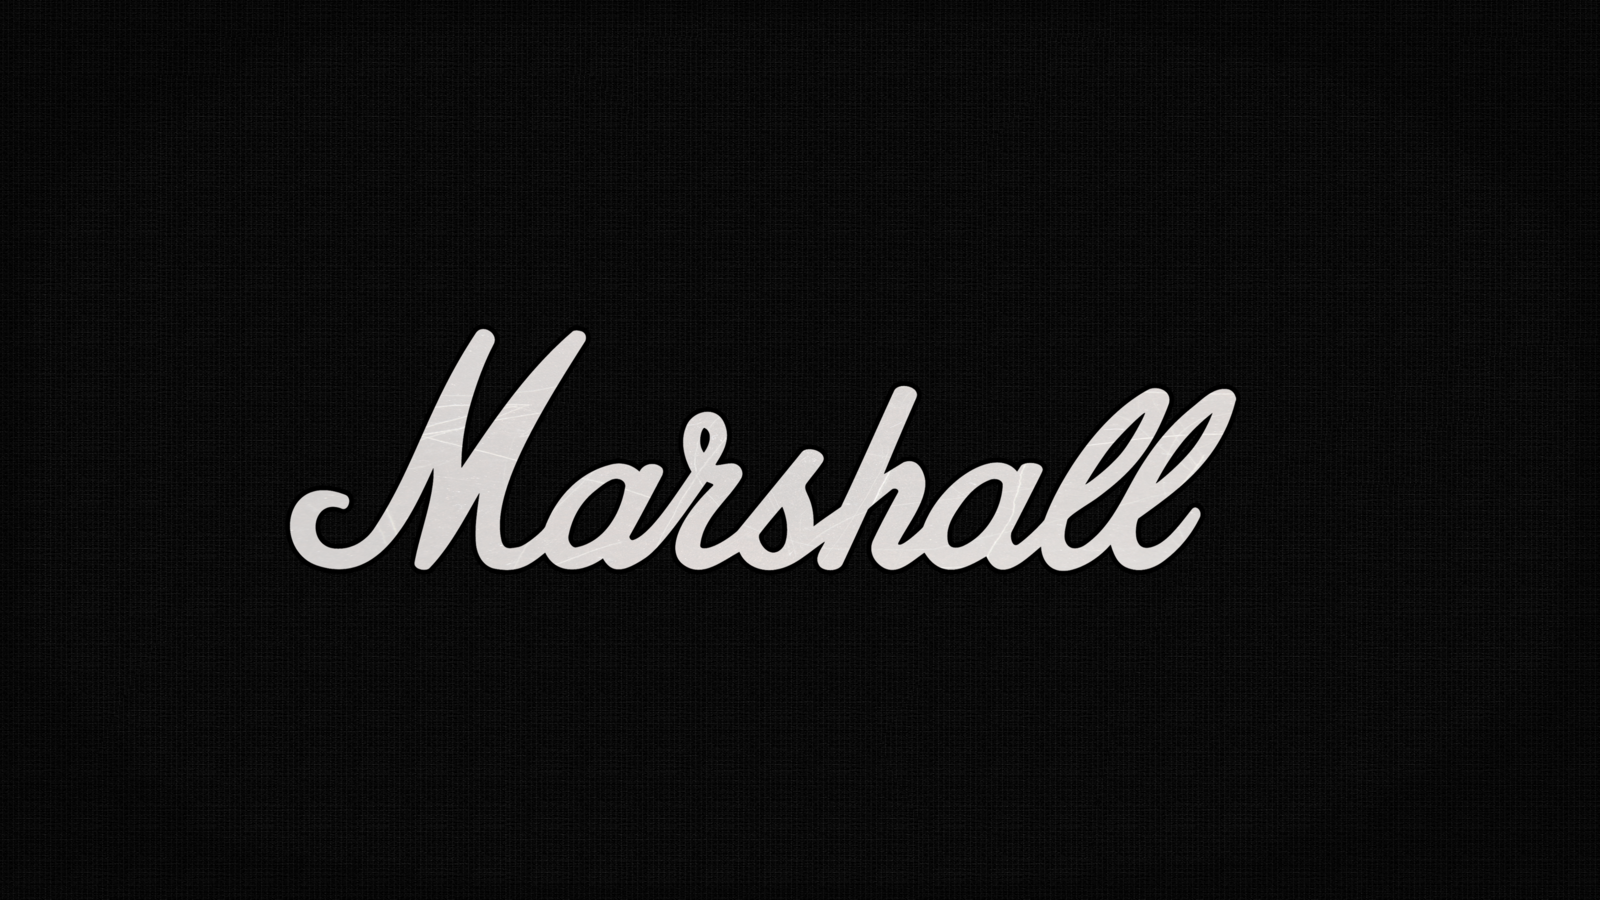 We Are Marshall Logo Marshall wallpaper by derjojo